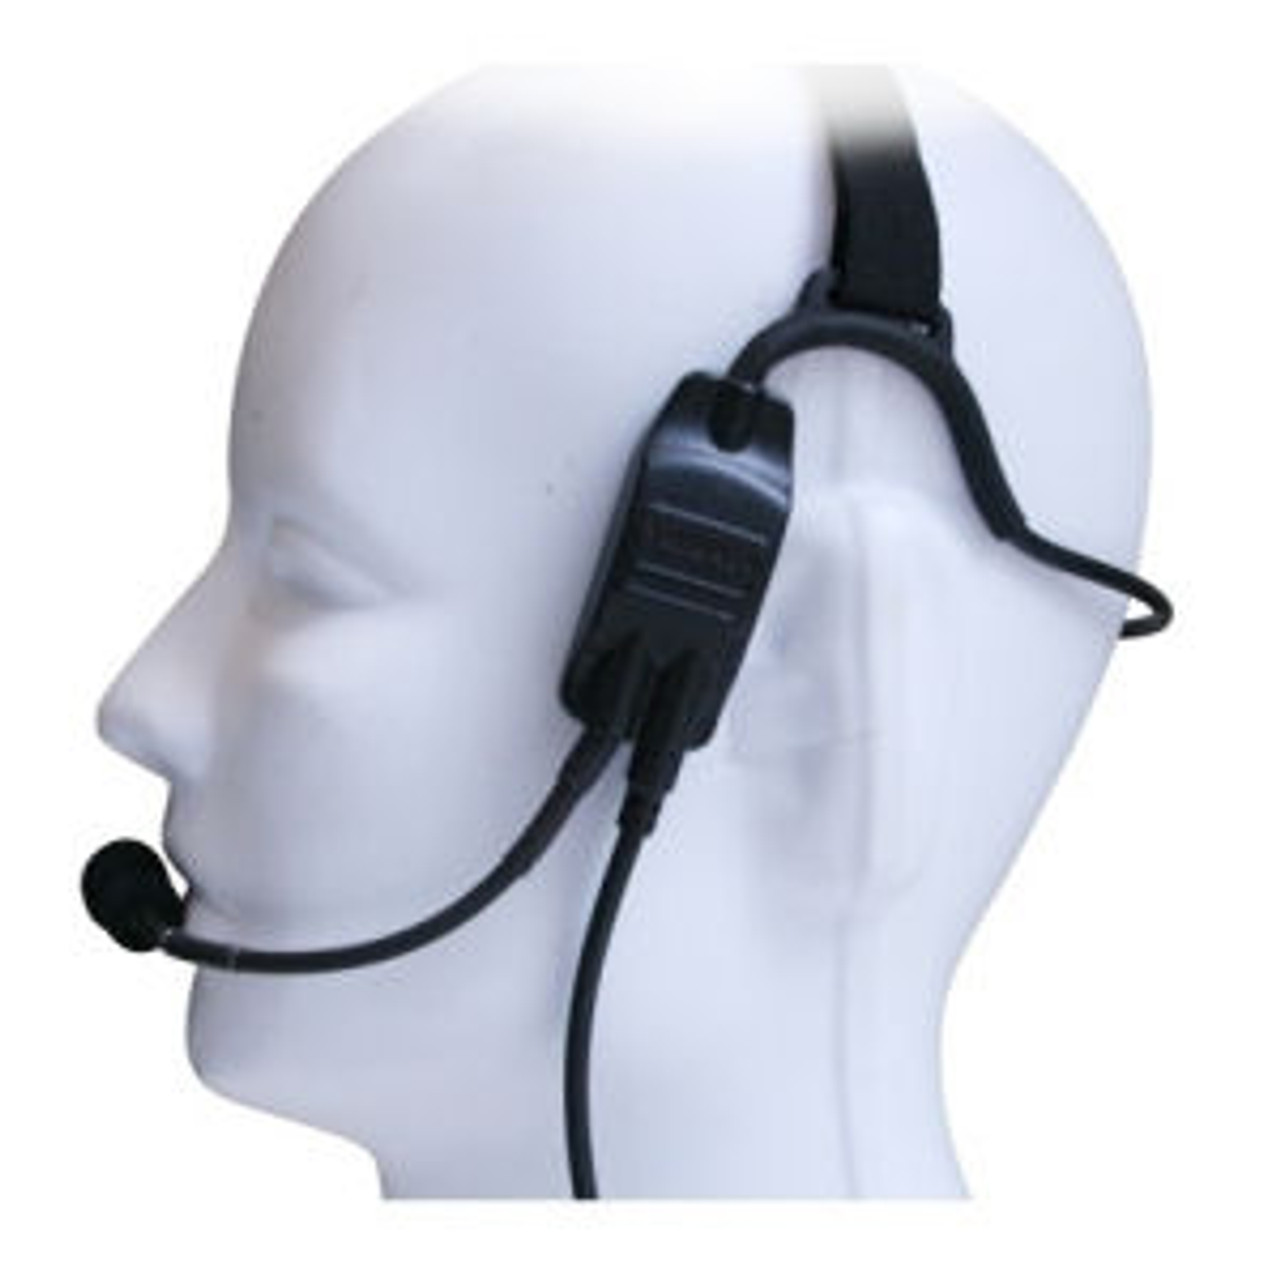 Vertex Standard VX-131 Temple Transducer Headset